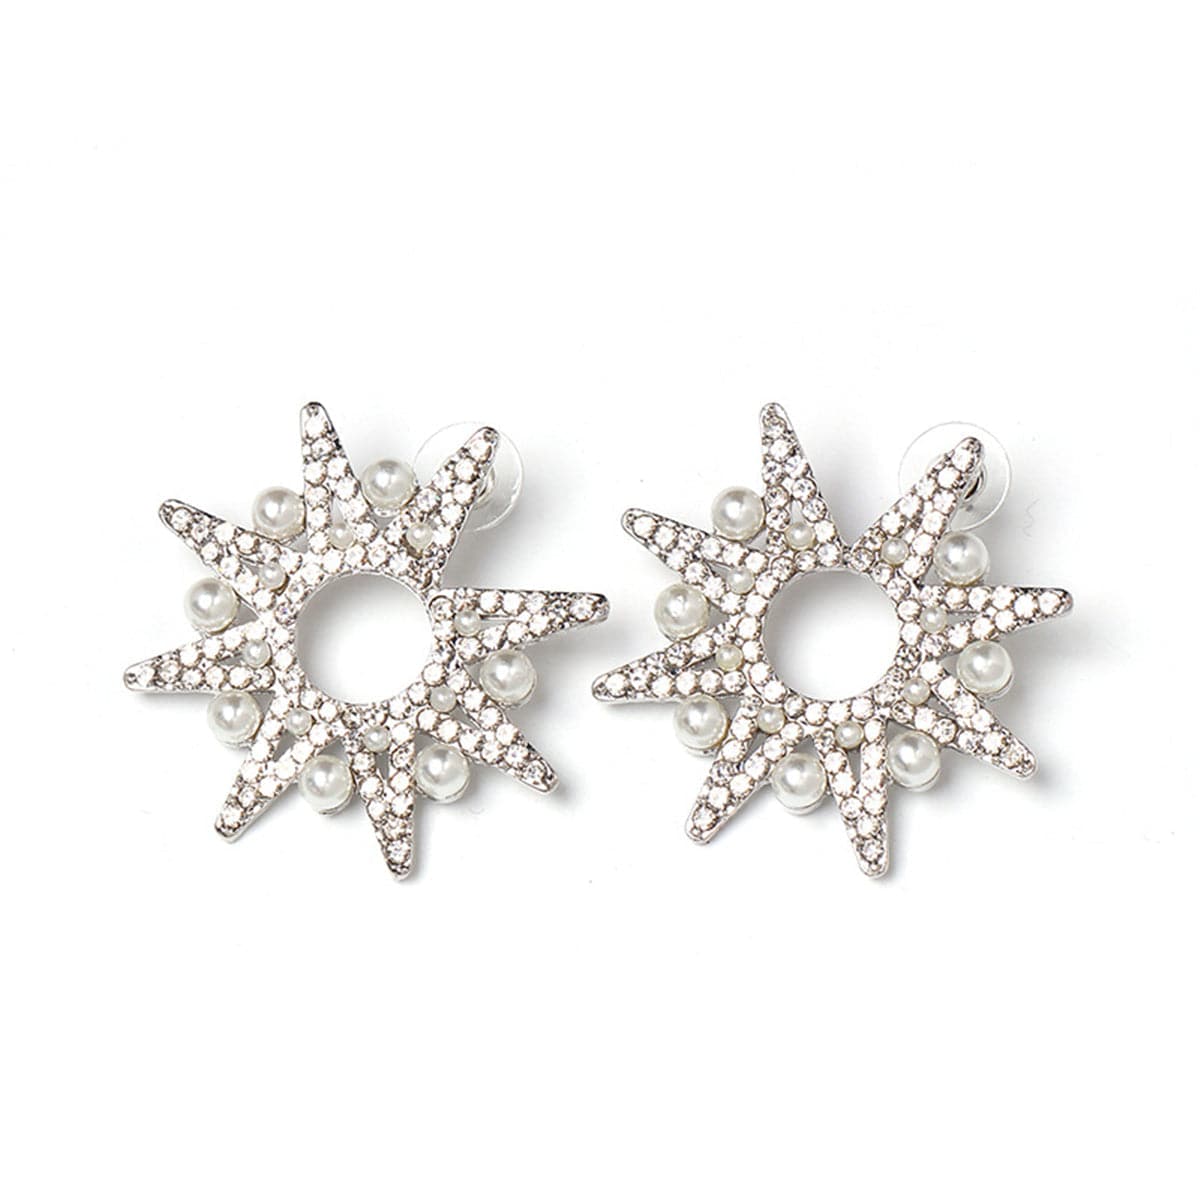 Cubic Zirconia & Pearl Silver-Plated Spike Star Stud Earrings